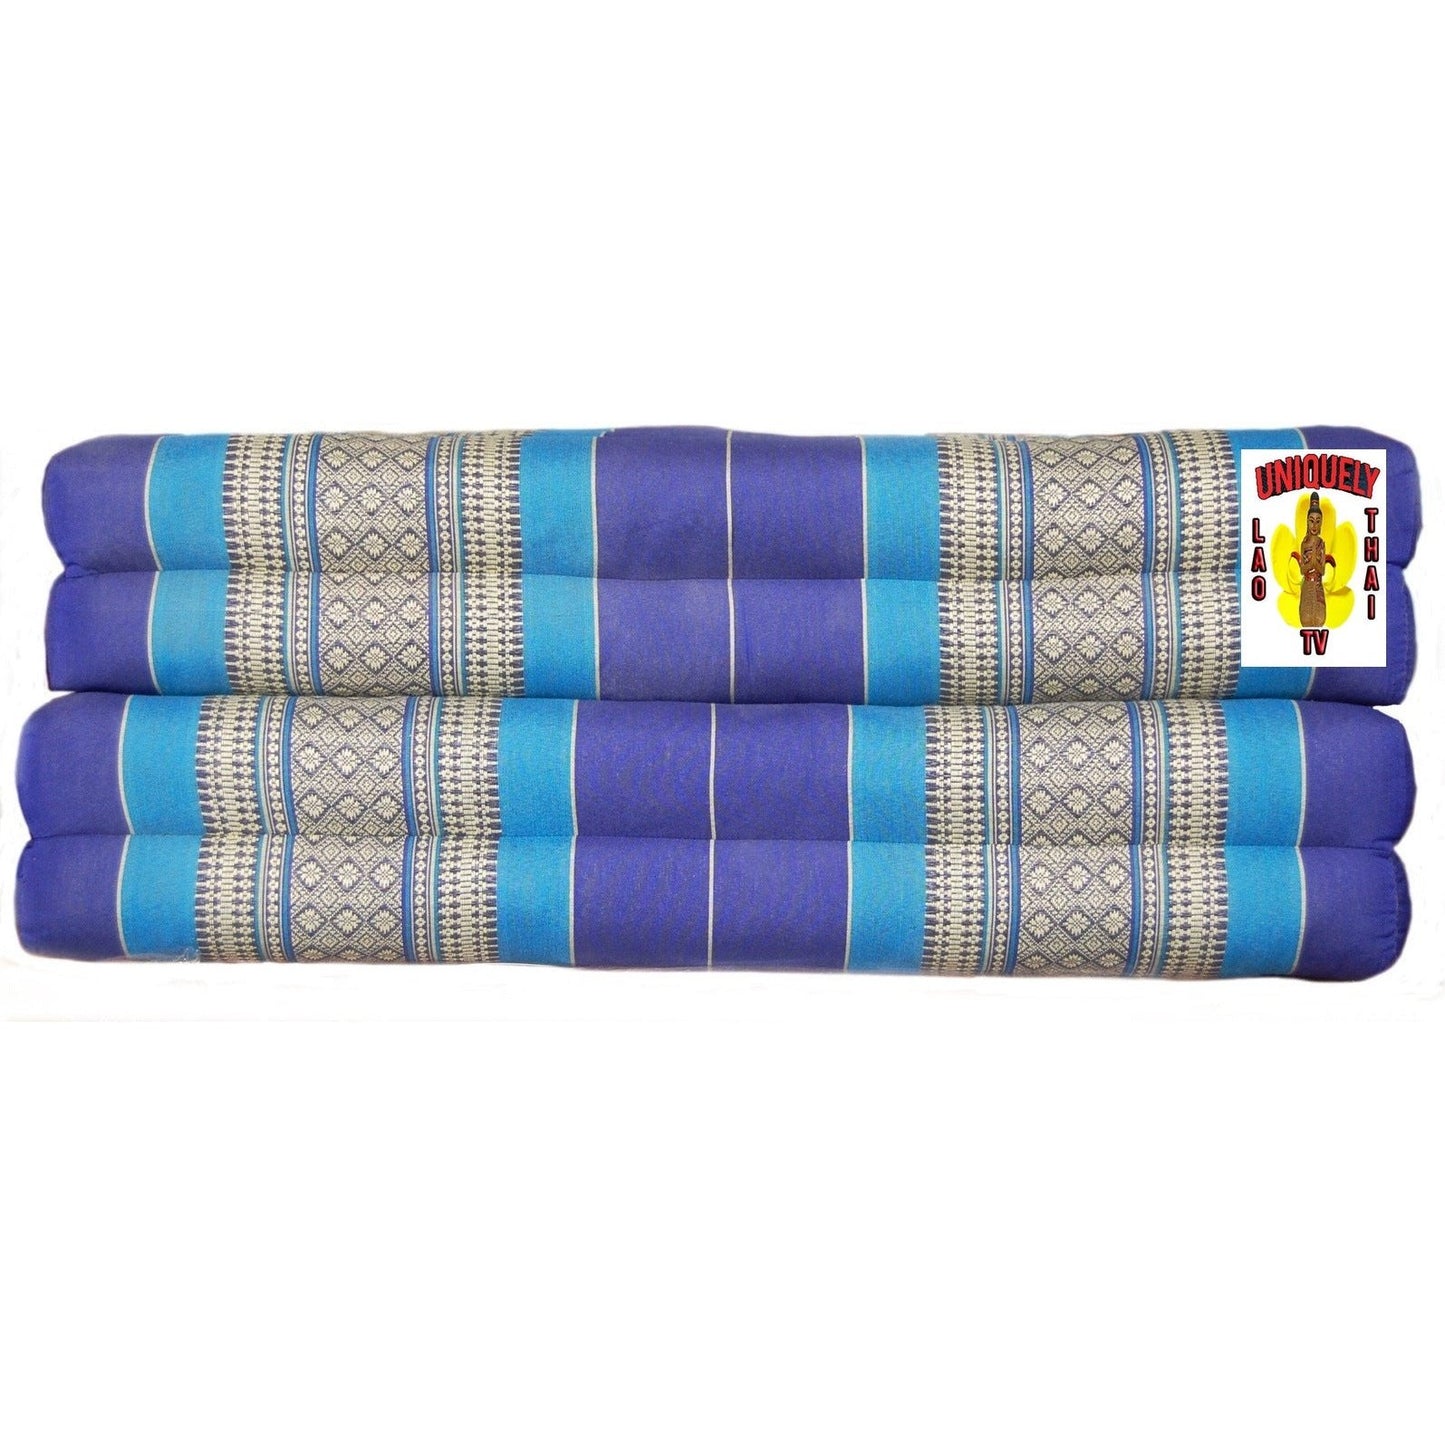 Kapok Thai Mattress Four Fold Dark Blue, Light Blue and White.